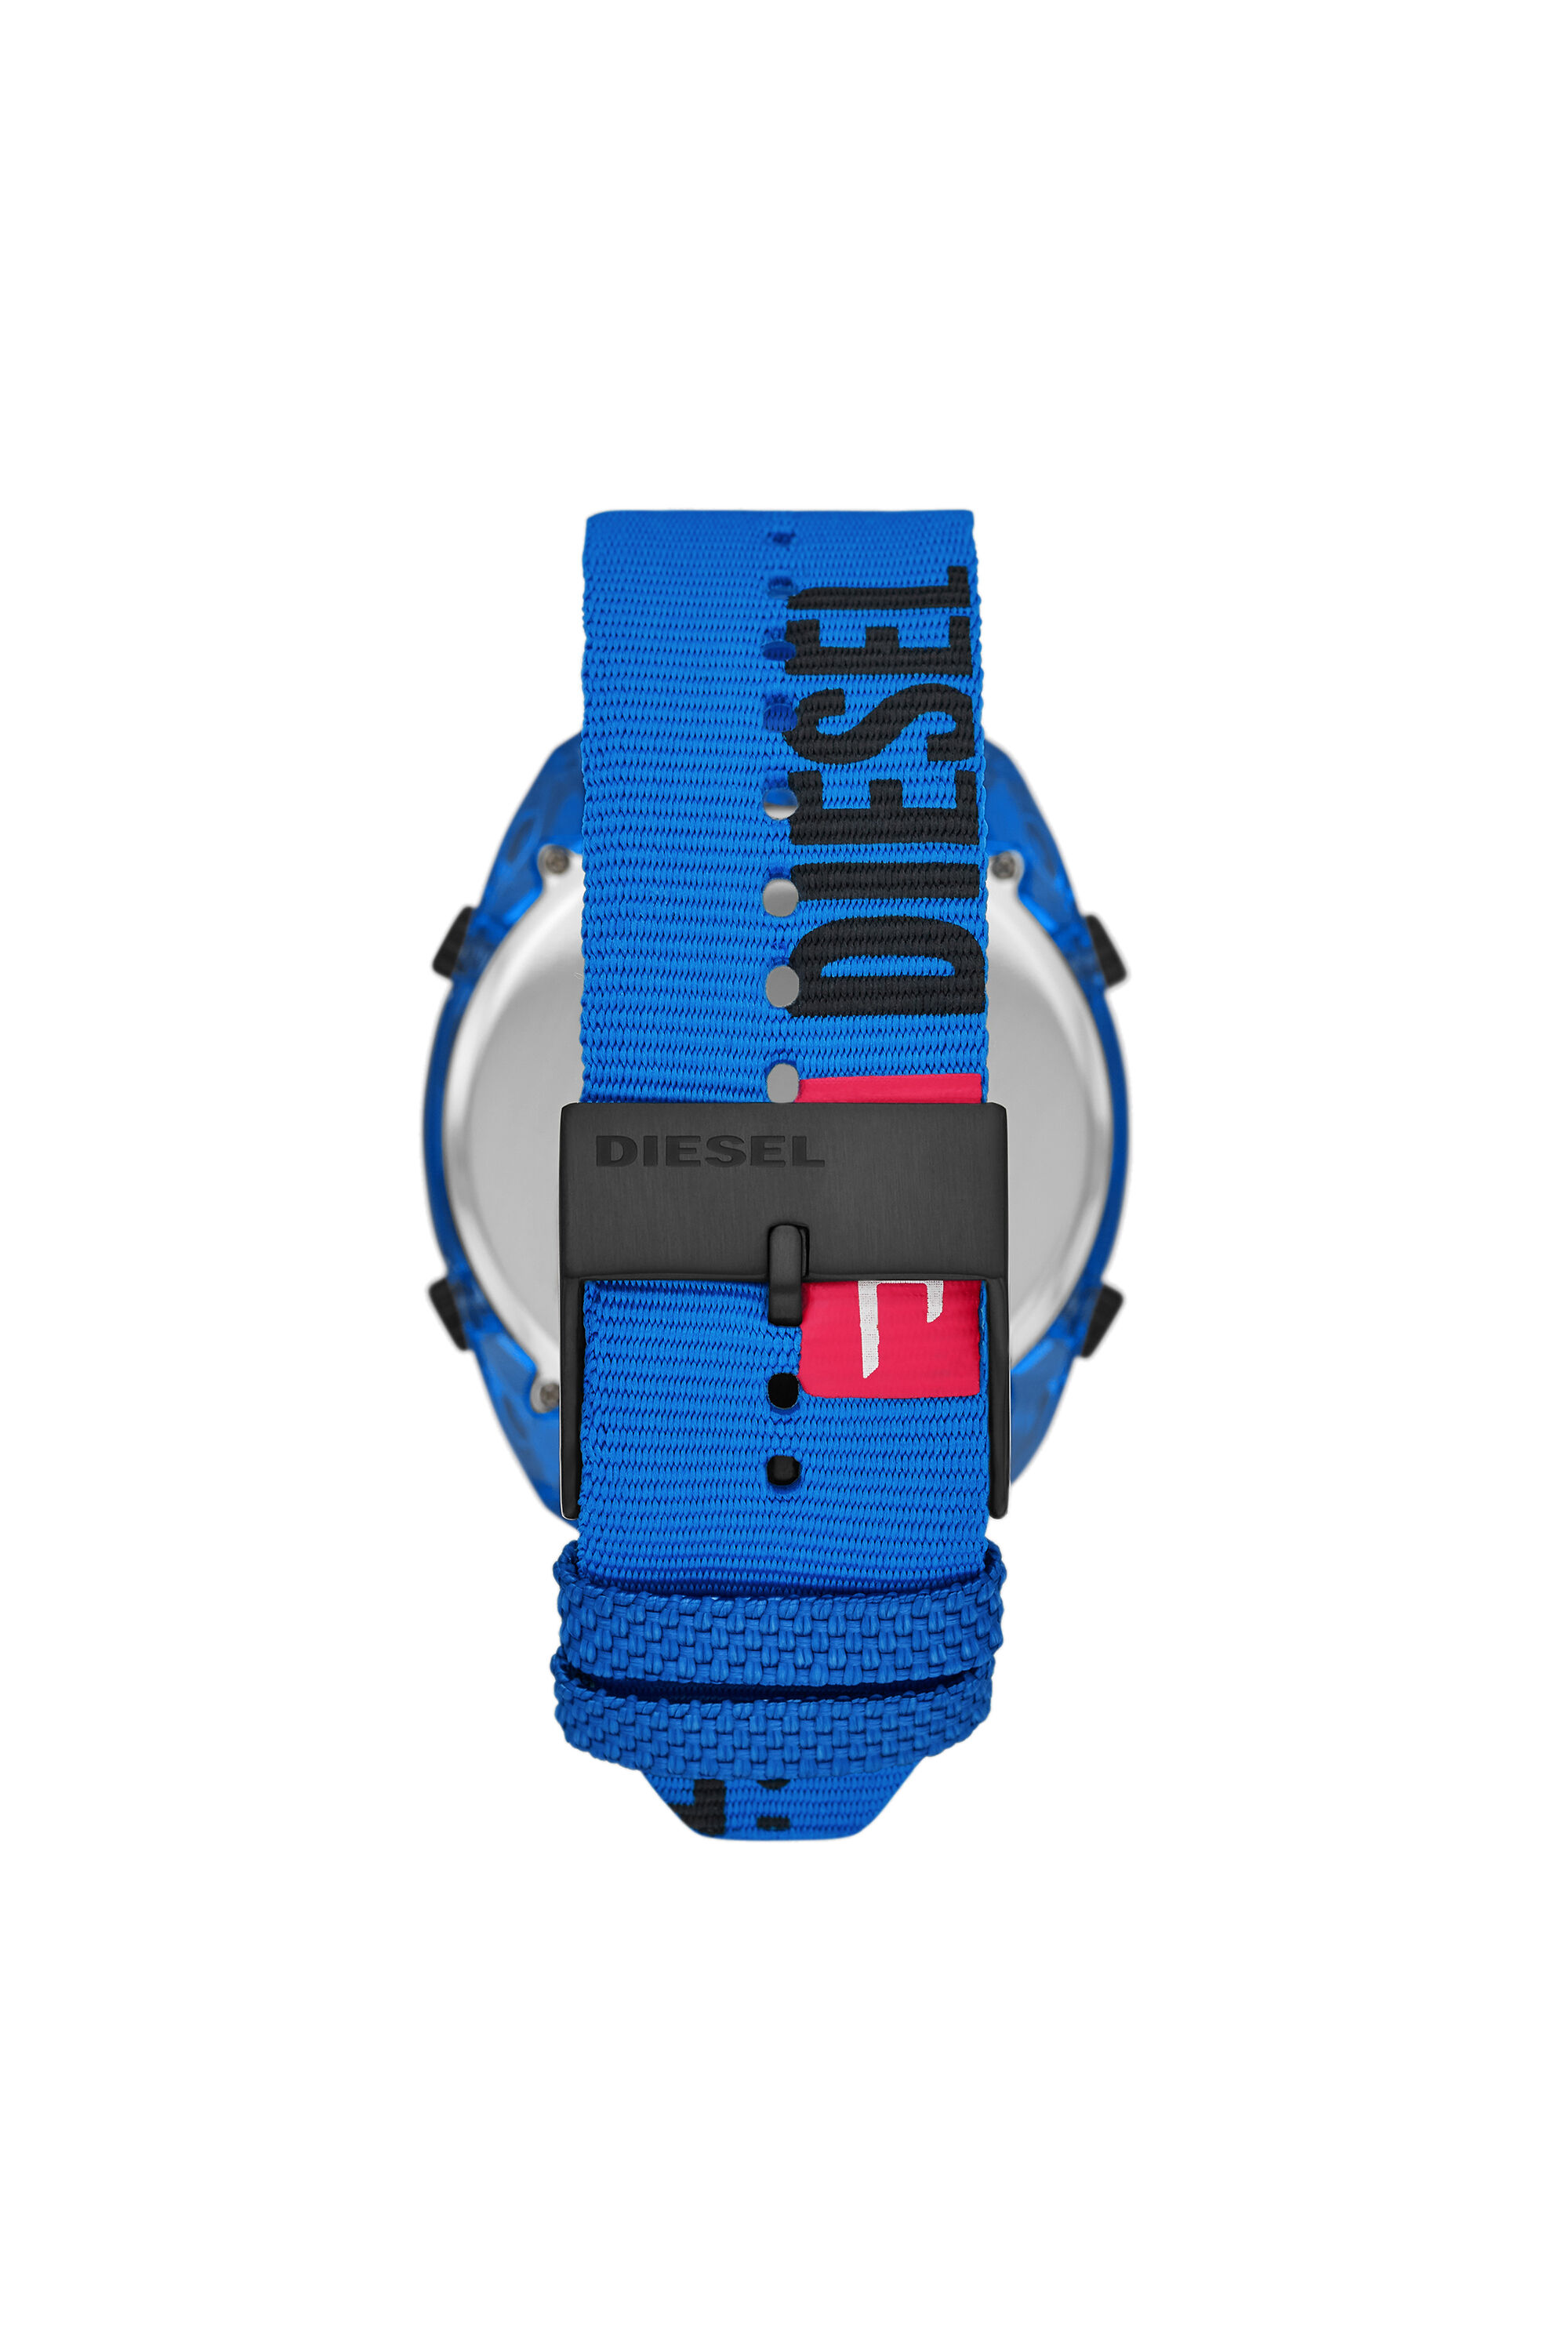 Diesel - DZ1944, Man Crusher digital blue nylon watch in Blue - Image 2